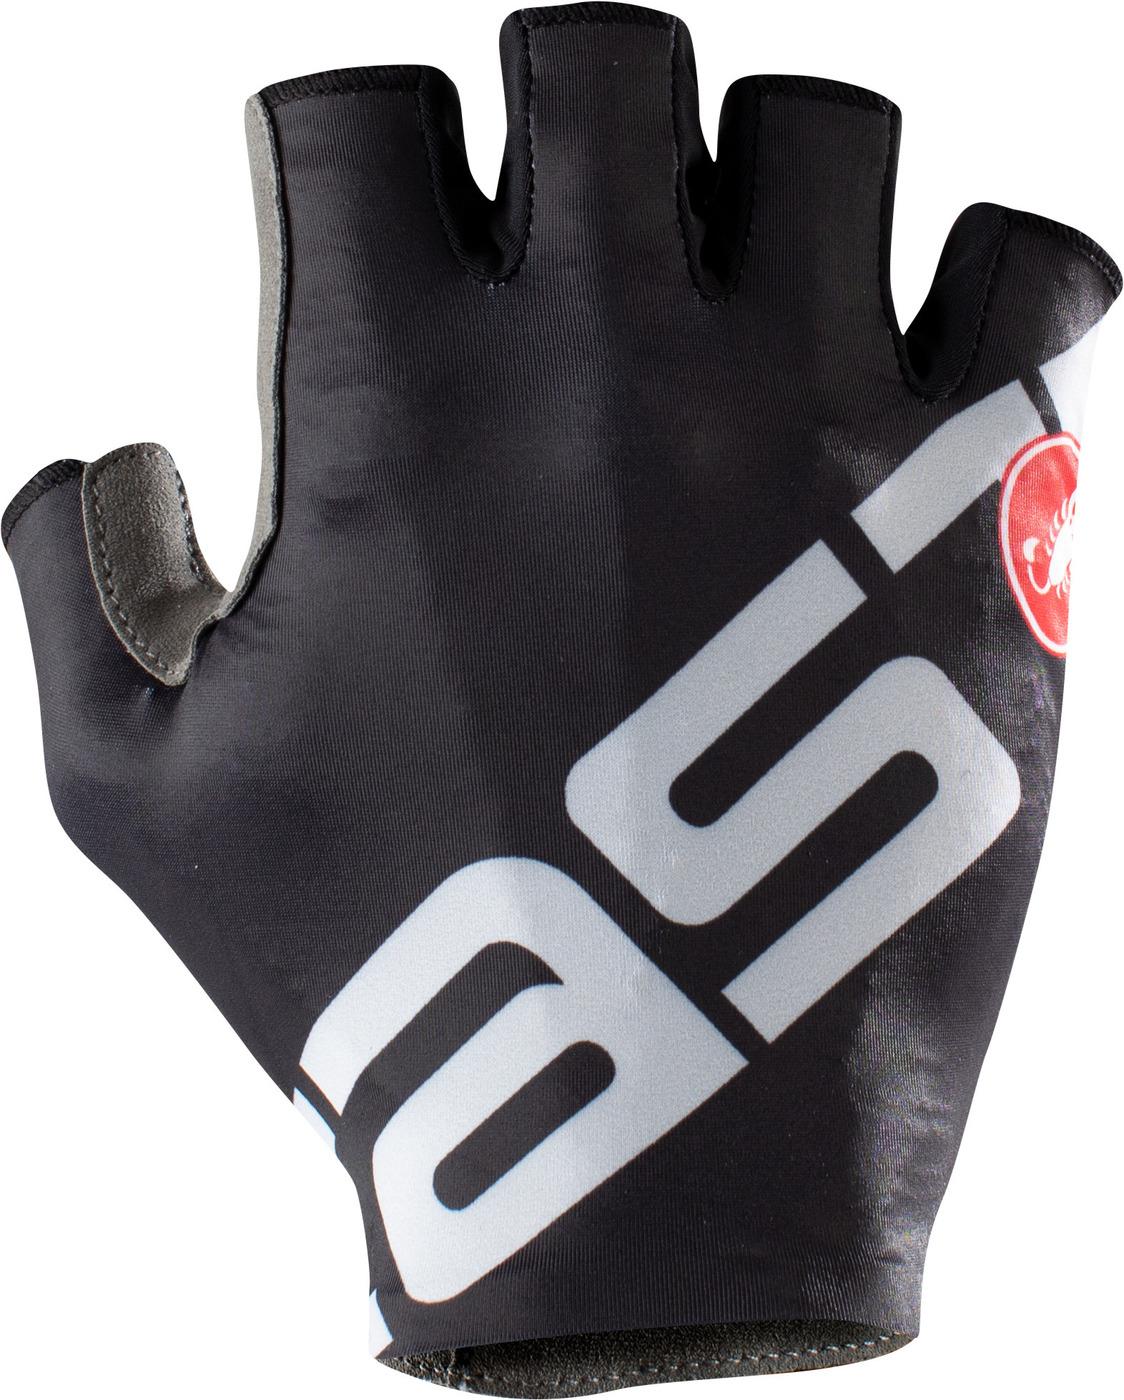 Castelli Competizione 2 Cycling Gloves  Light Black/silver